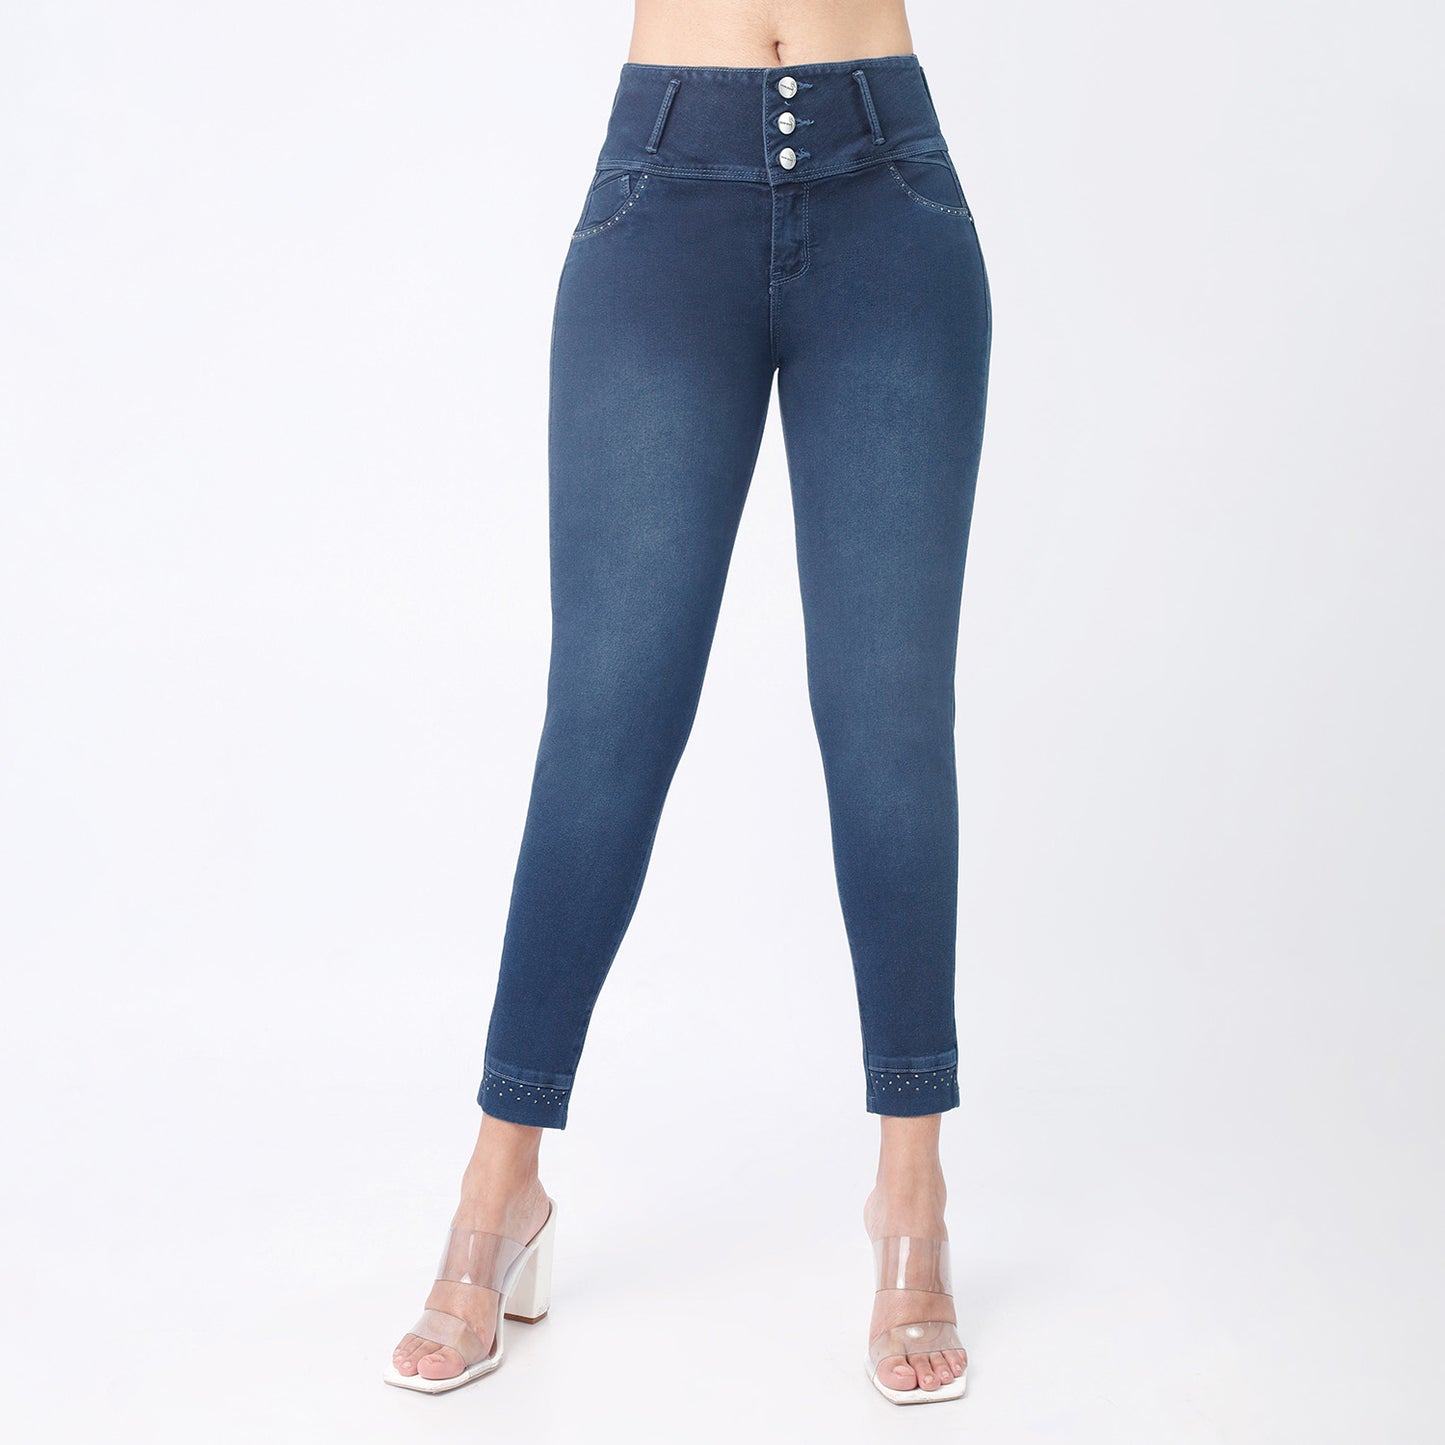 Jeans Push Up Mujer Semimoda Pitillo Tobillero Cintura Gráfito – 230194